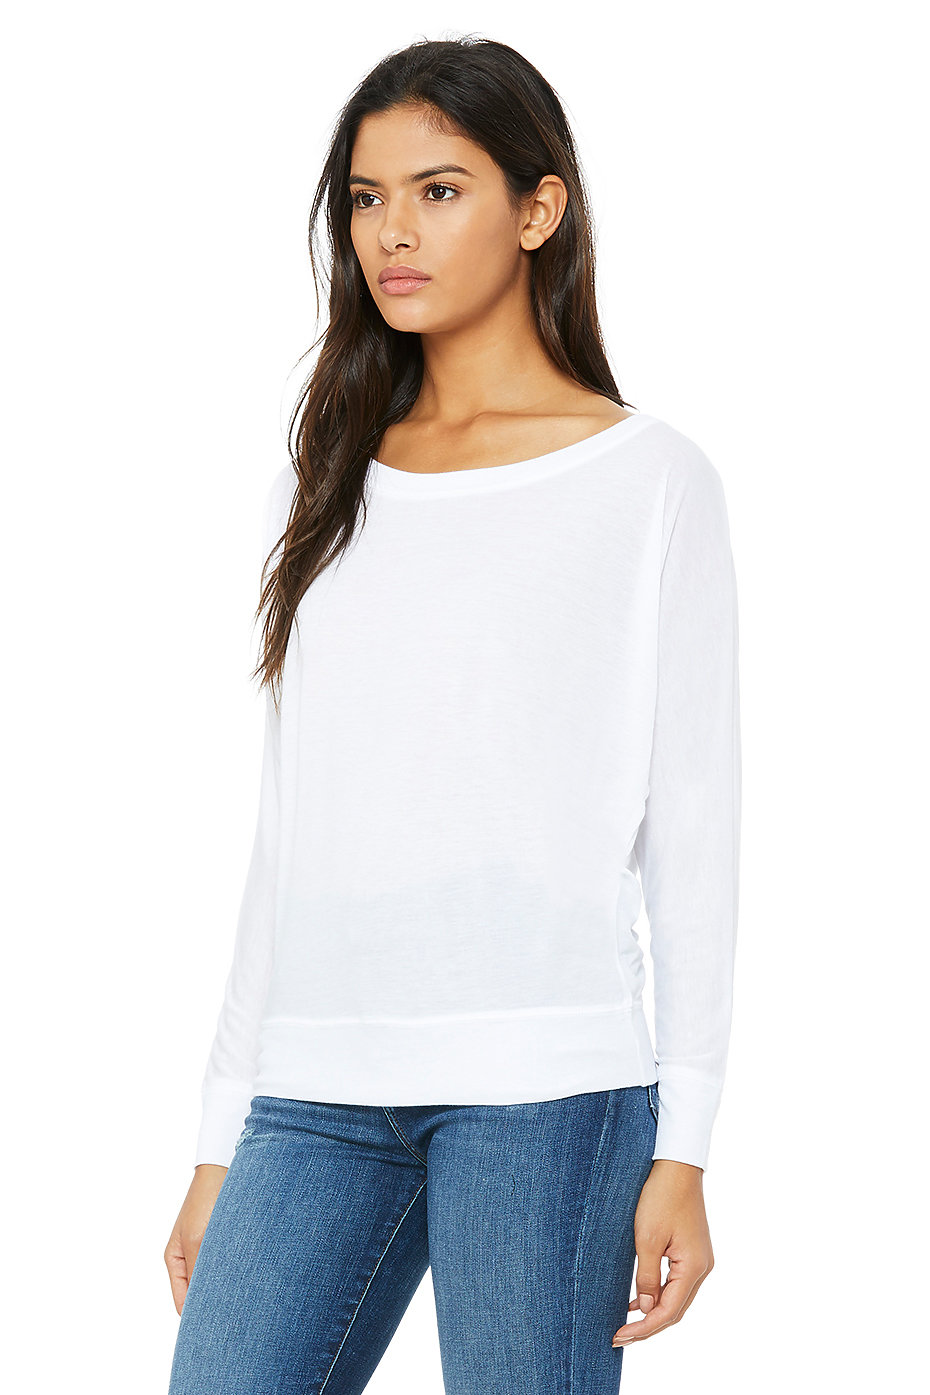 Long-Sleeve Off Shoulder T-ShirtS WHITE 8850 Bella Ladies 3.7 oz